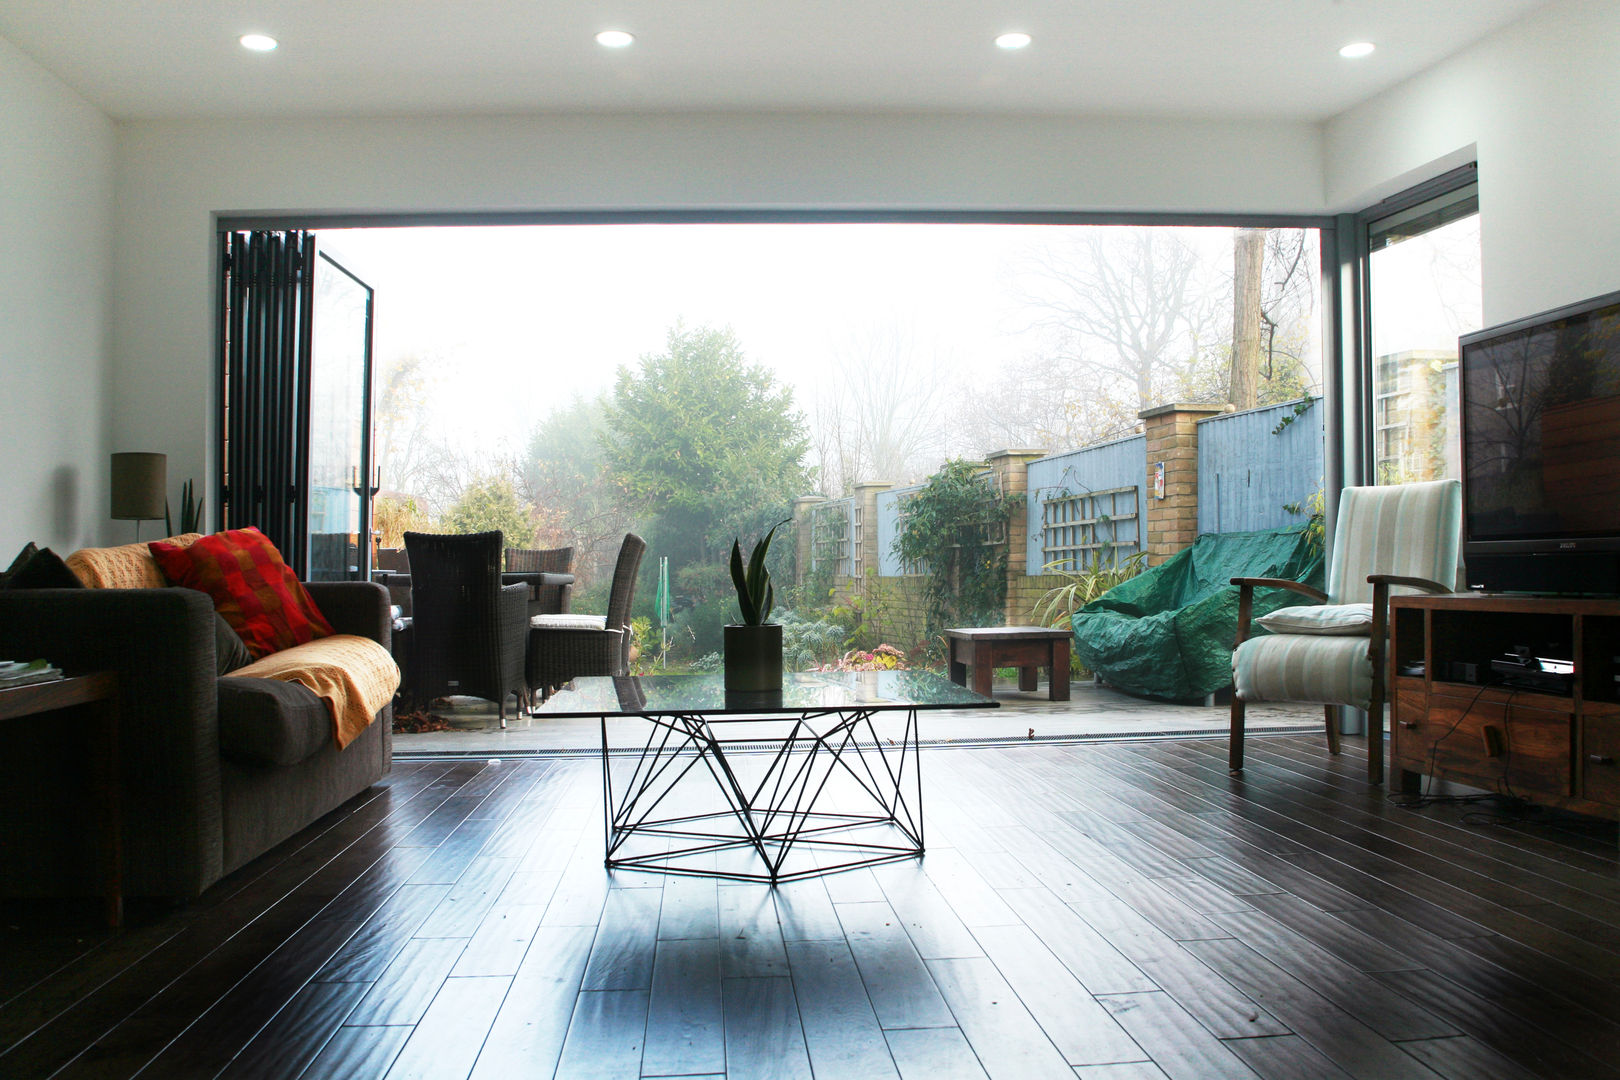 Brockley, Lewisham SE4, London | House extension GOAStudio London residential architecture limited Salones modernos